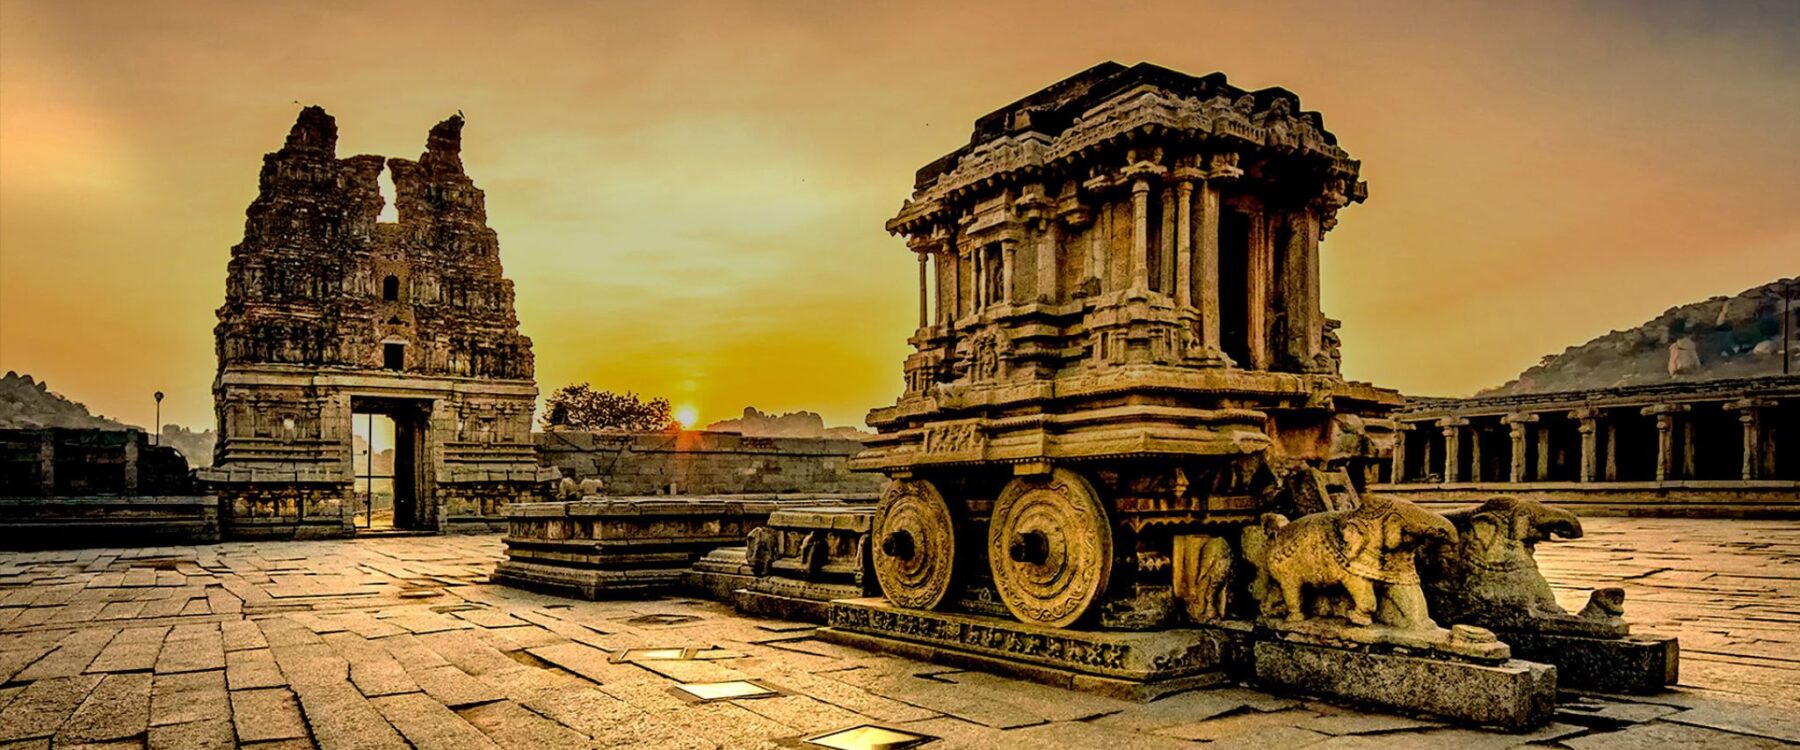 Top Heritage Sites in Karnataka Must-Visit Historic Places